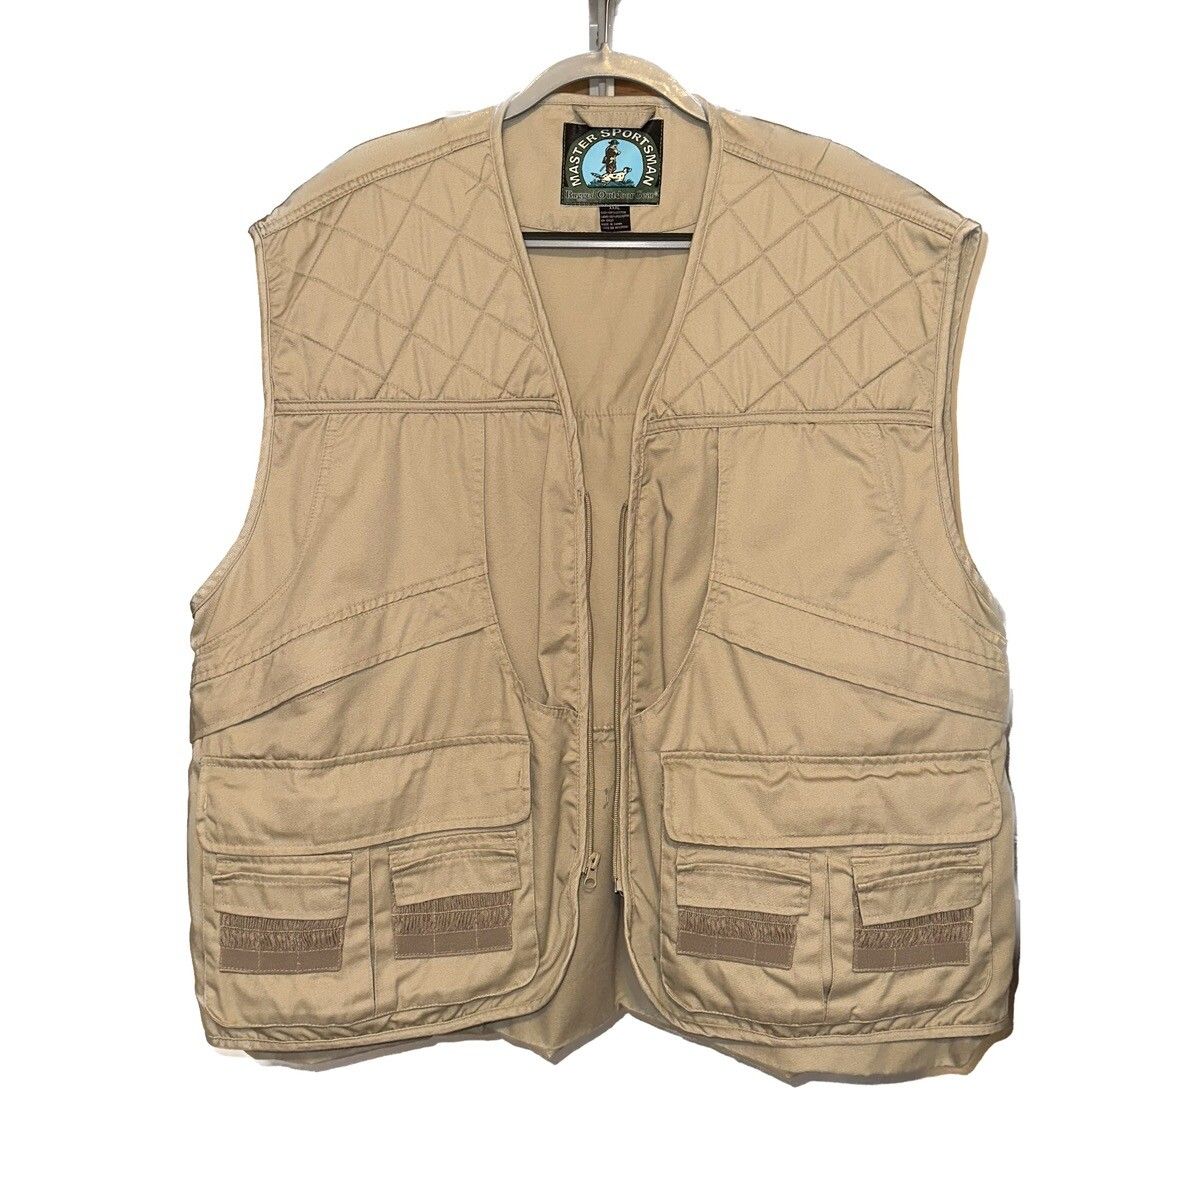 Outdoor Life Master Sportsman Fishing Vest | Grailed